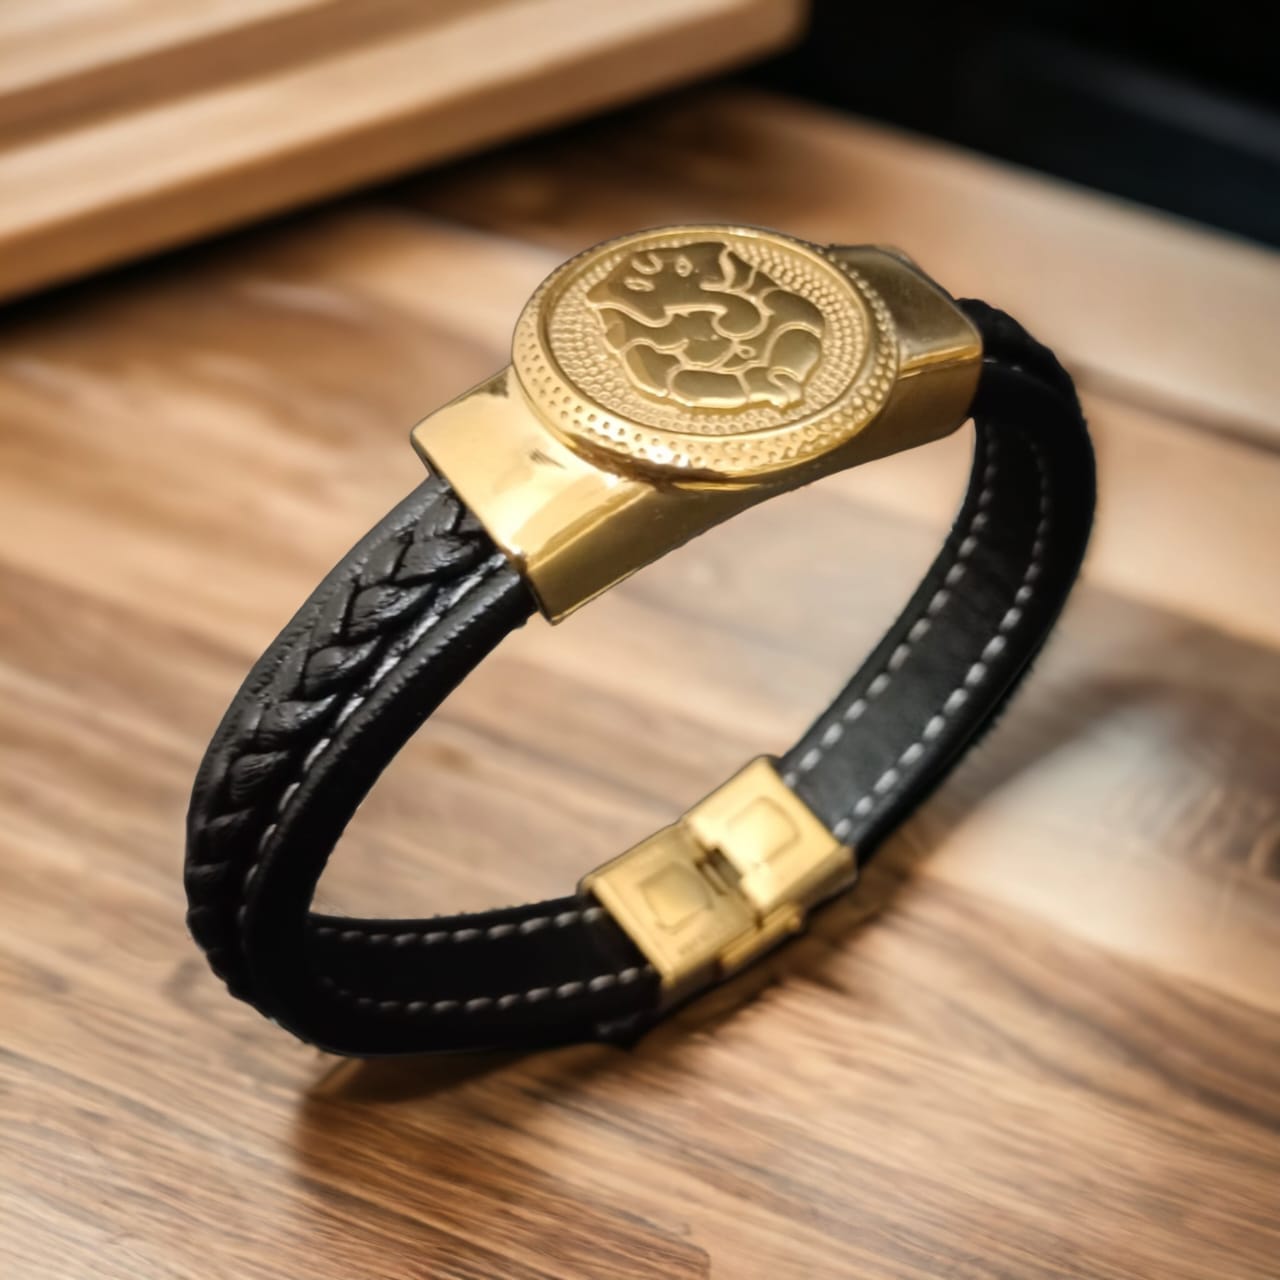 New Shree Ganesh Devotional Gold Bracelet